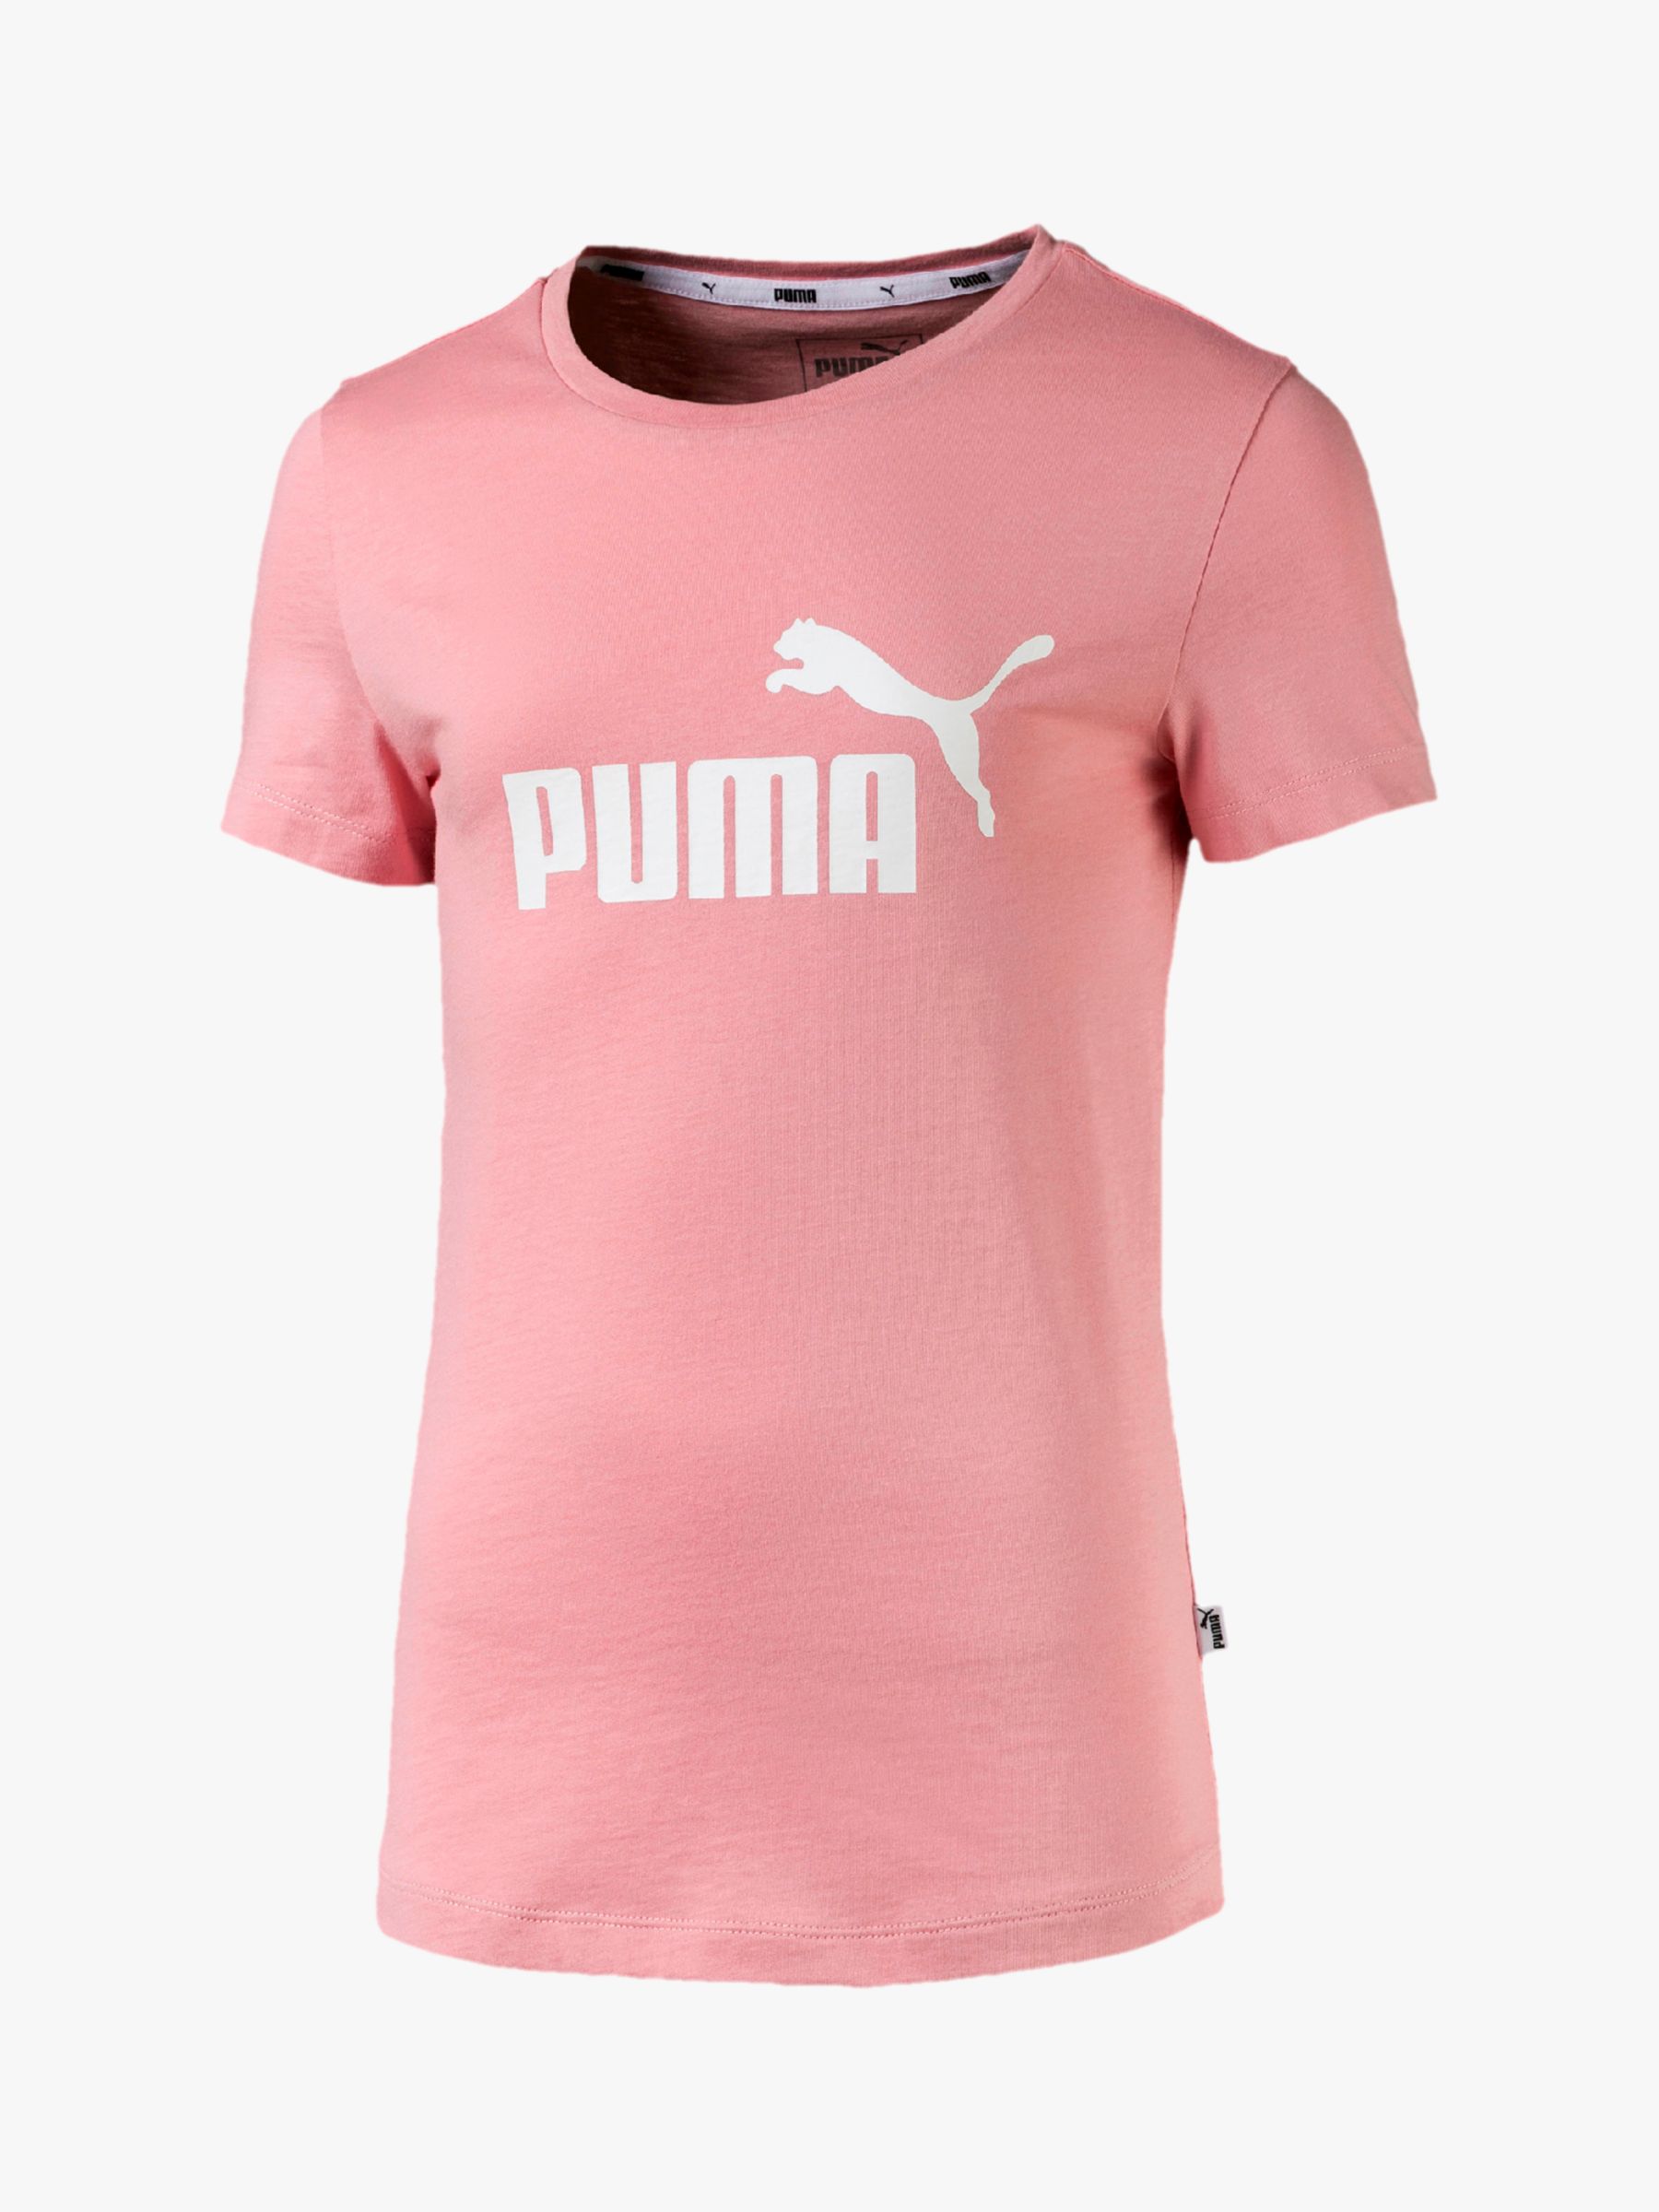 puma t shirt for girl